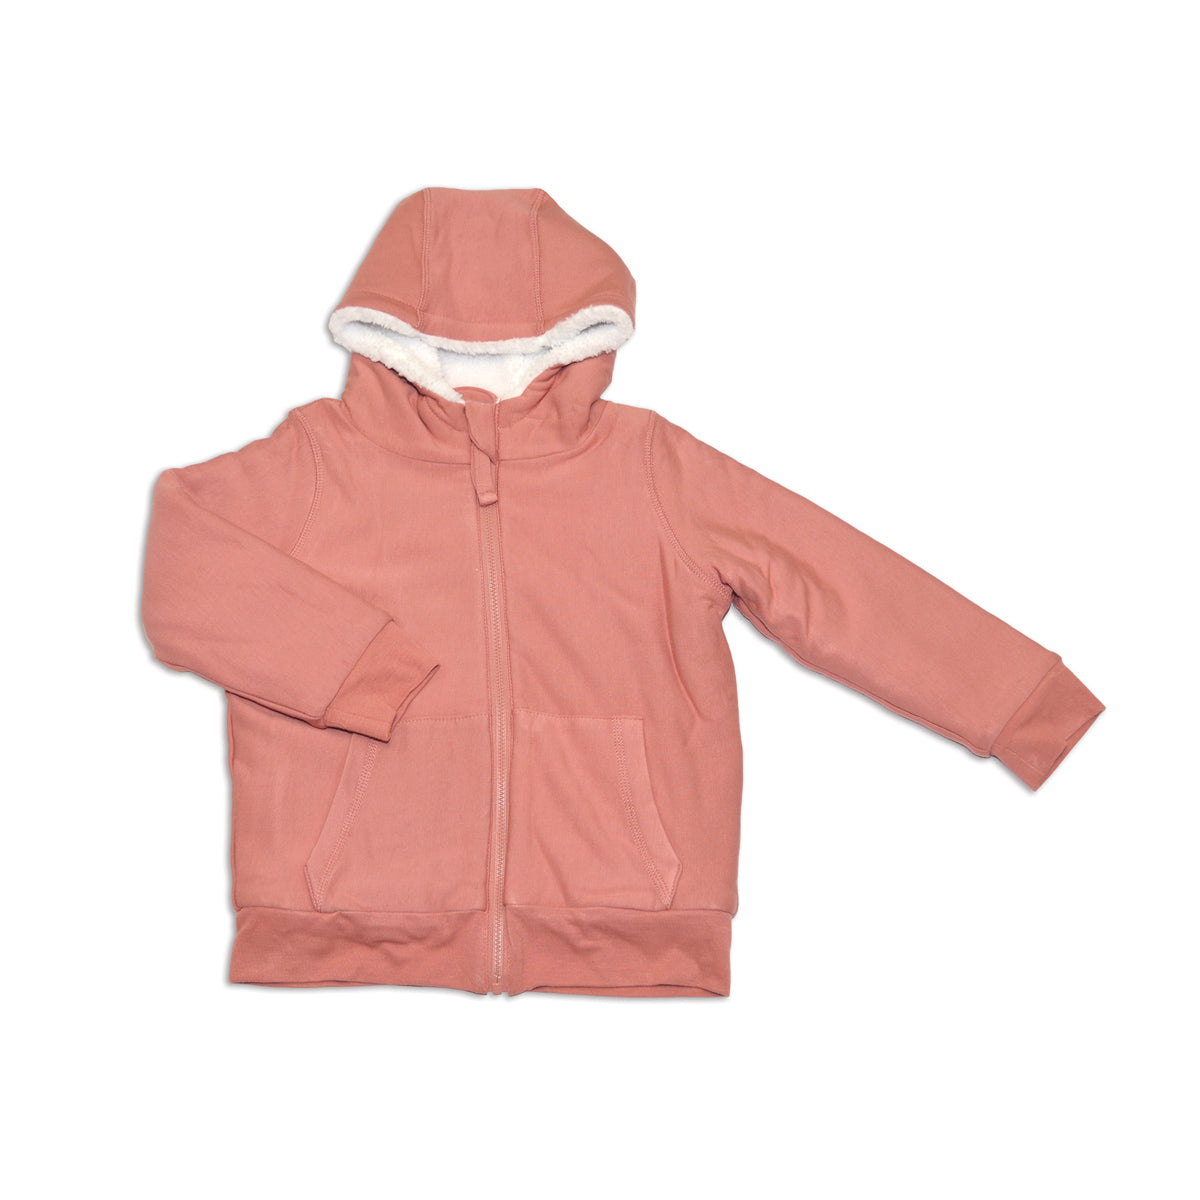 bamboo fleece zip hoodie with sherpa lining (ash rose)